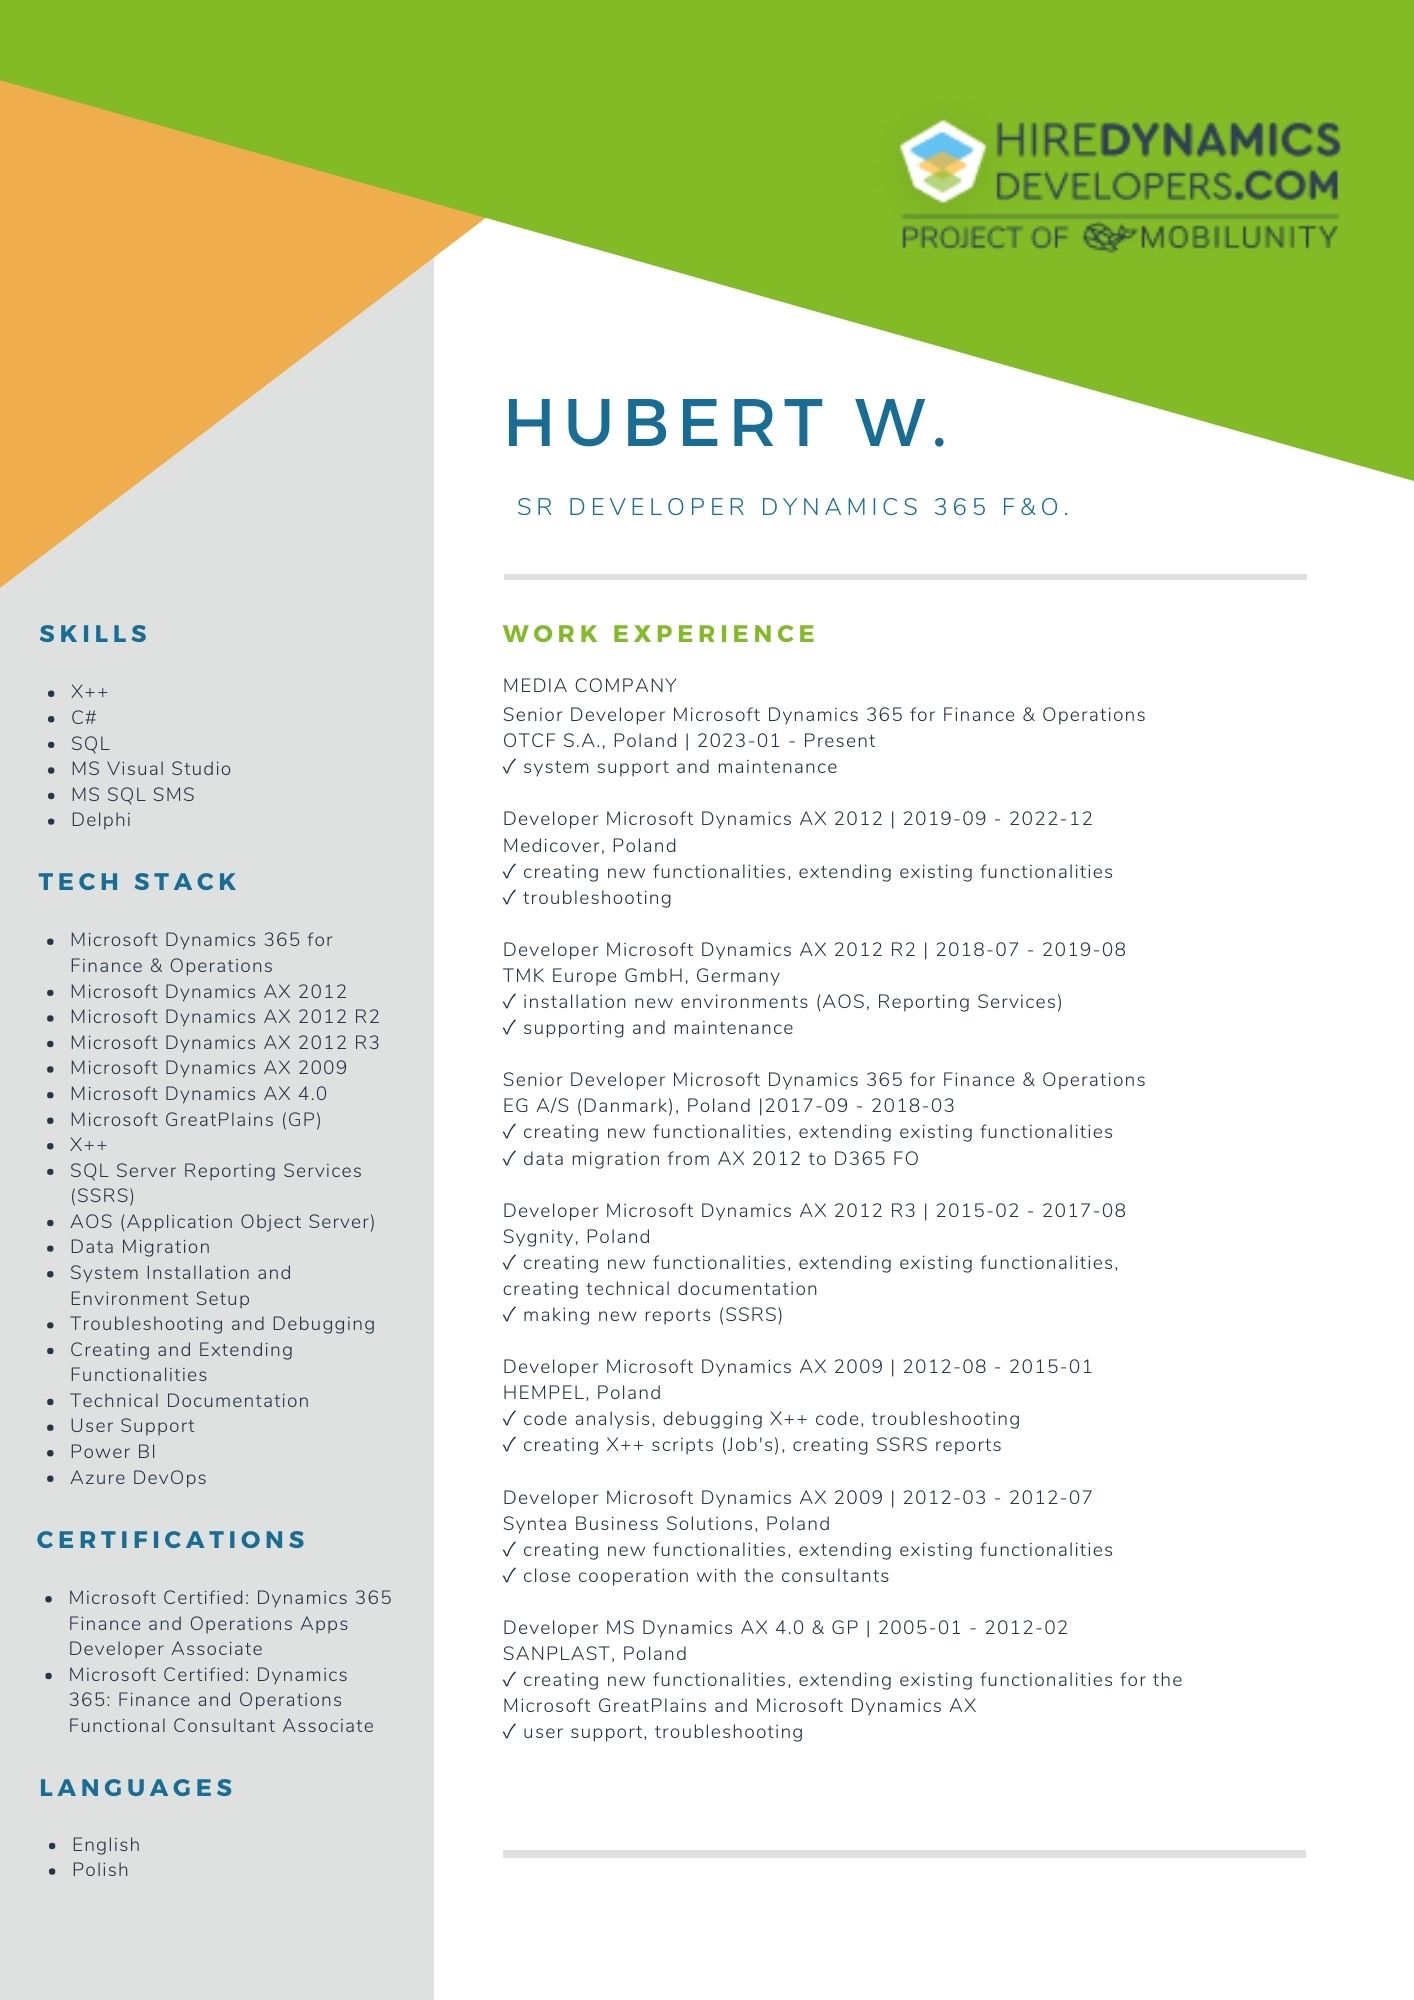 Hubert W. – Senior Developer Microsoft Dynamics AX